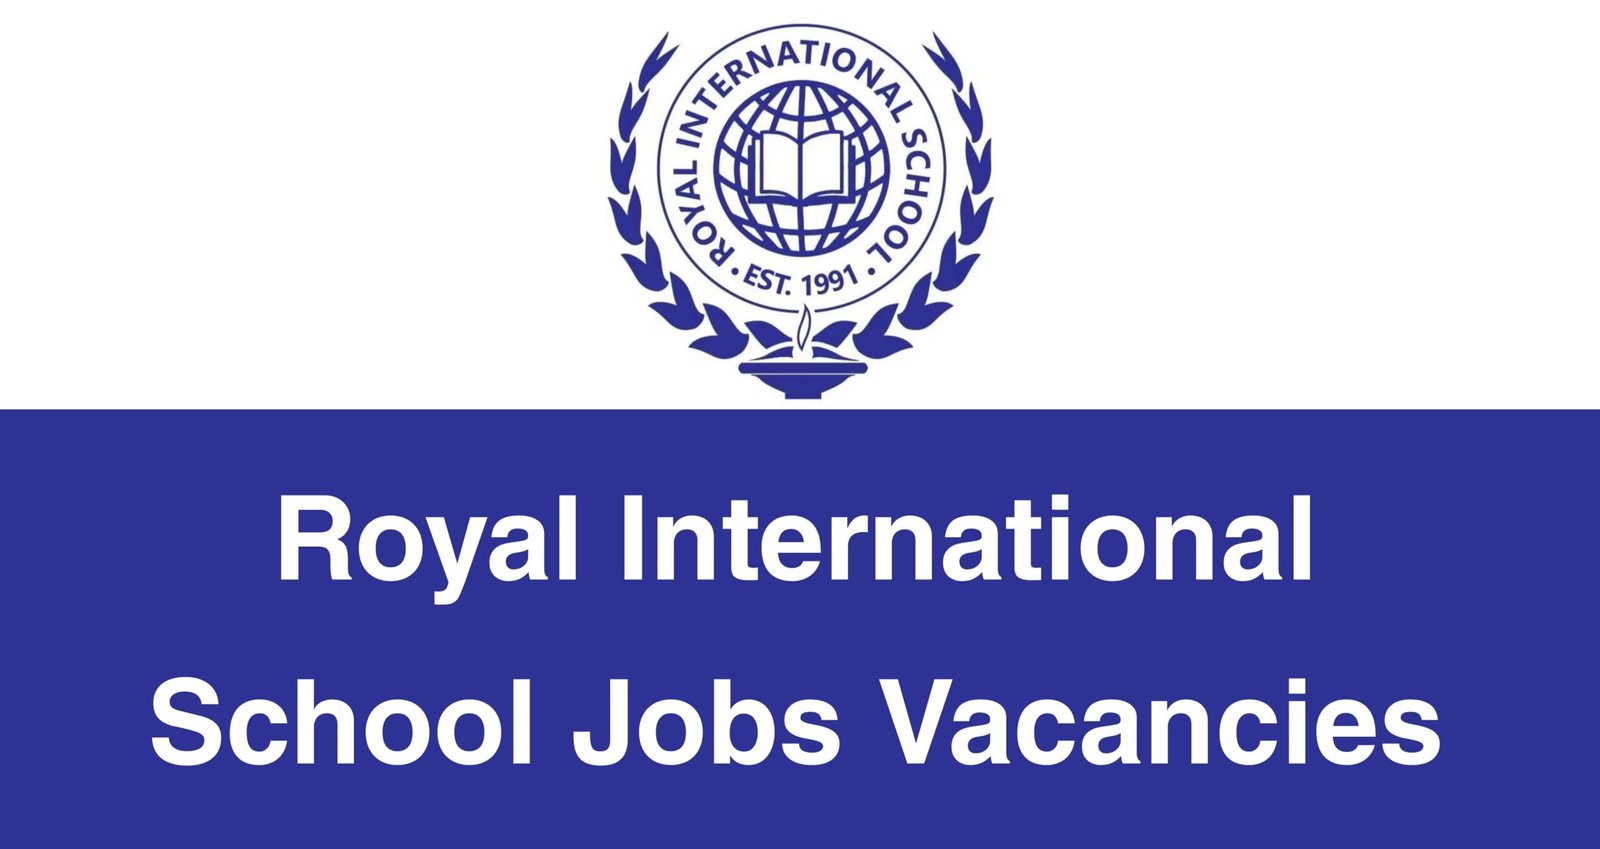 Royal International School Jobs Vacancies